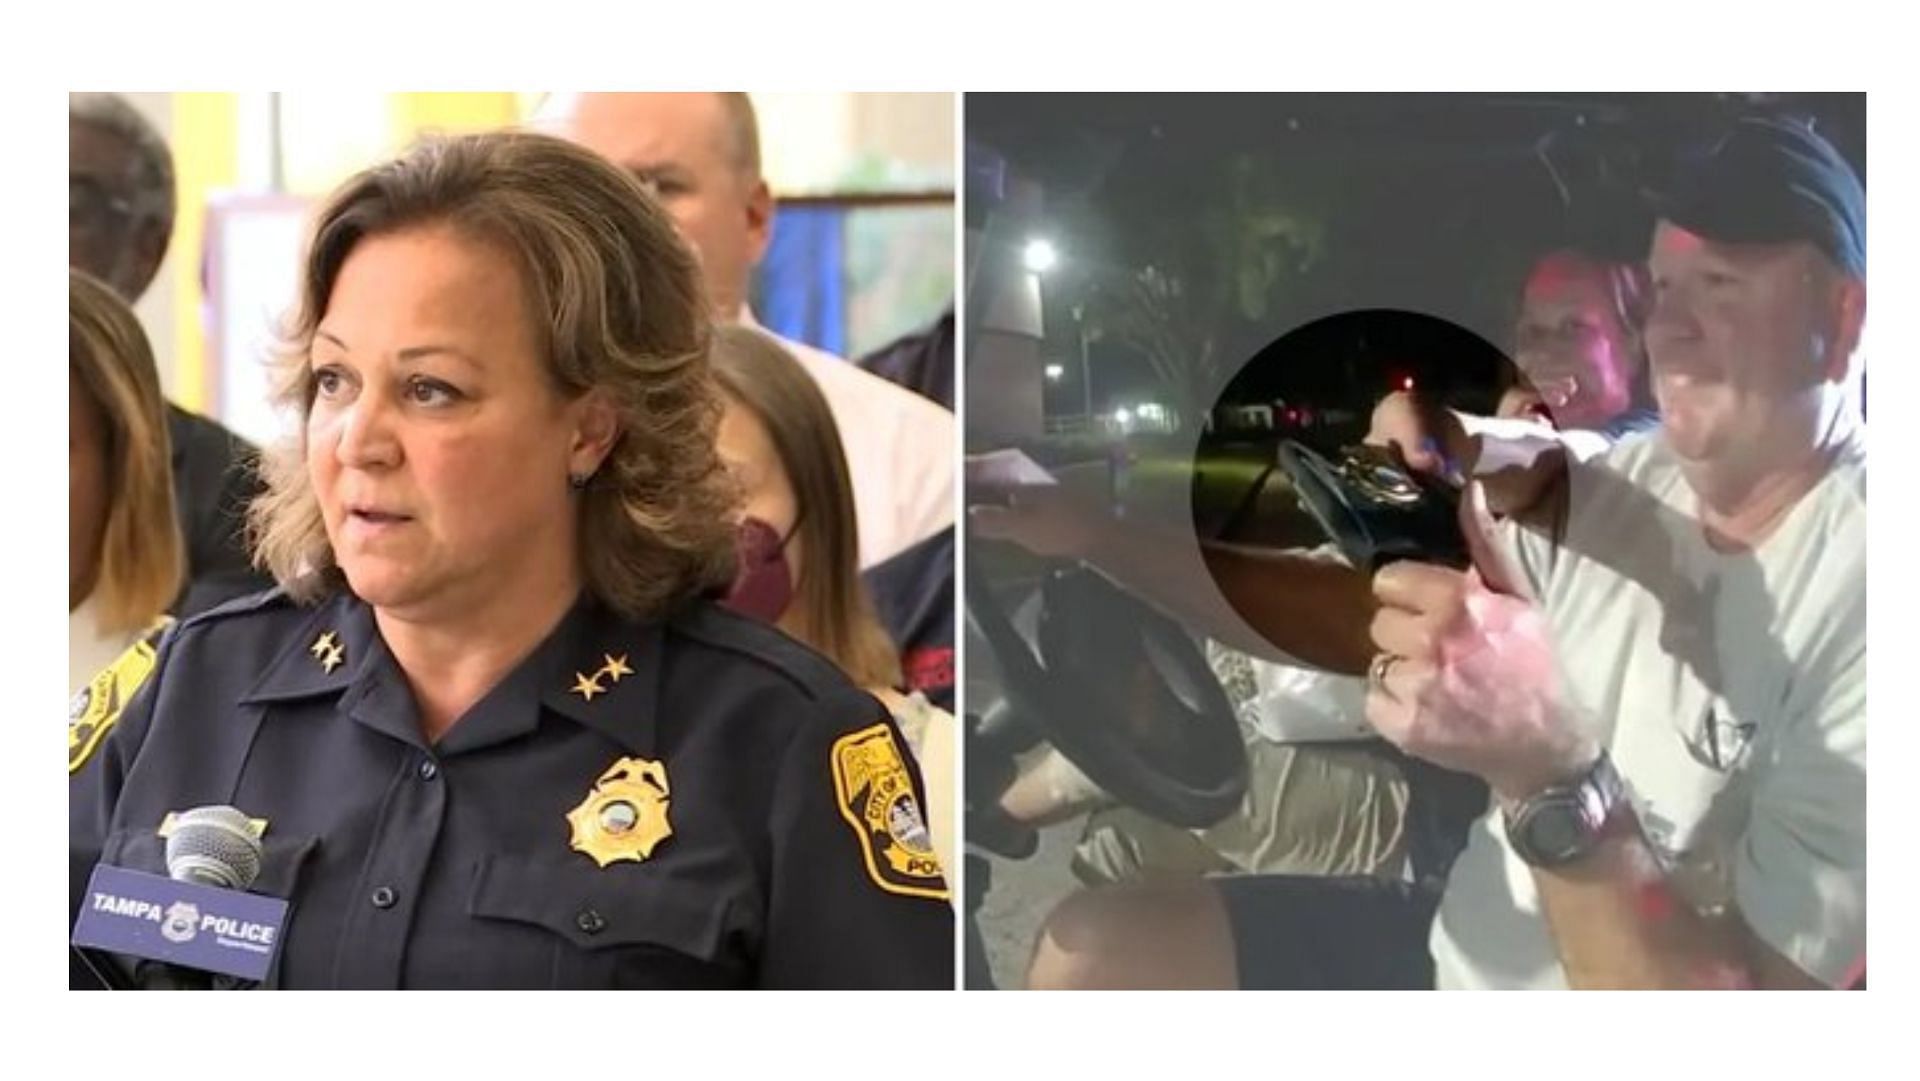 Tampa Police Chief Mary O